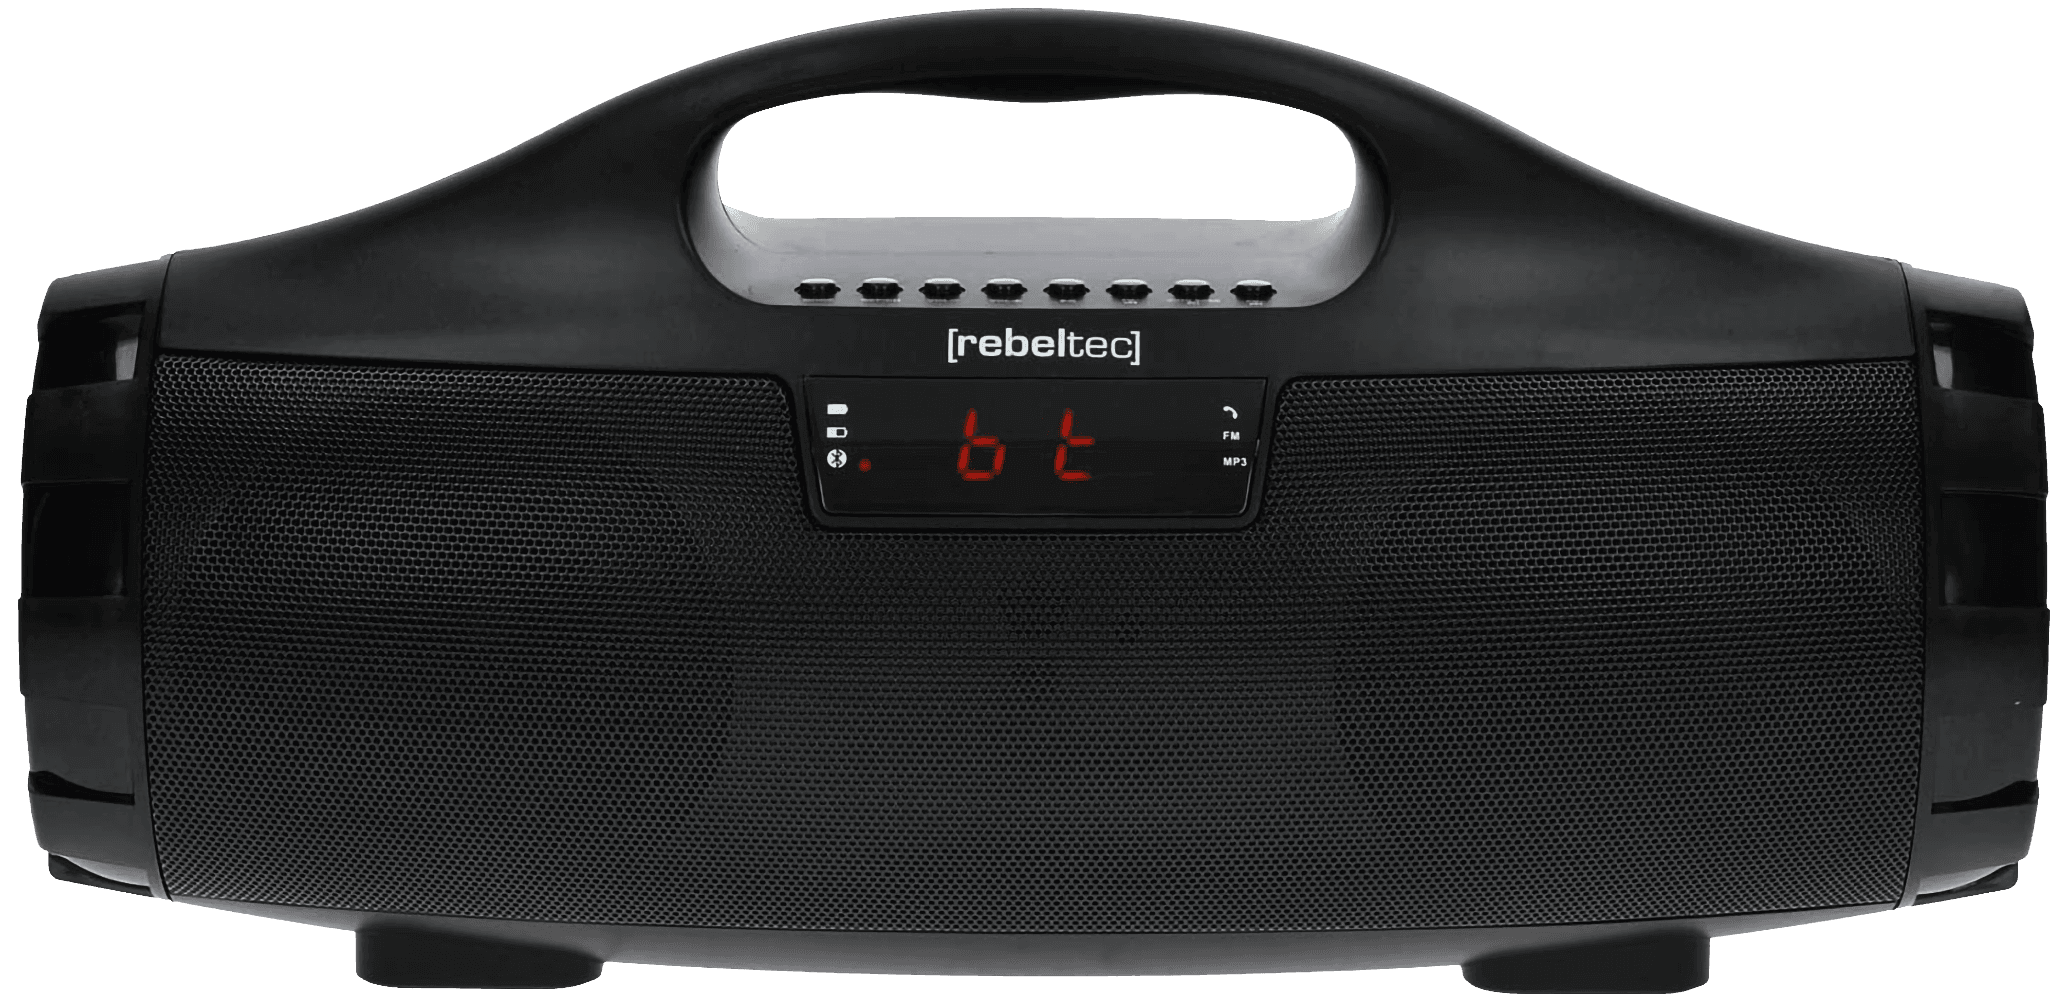 Nokia 1 Plus kompatibilis bluetooth hangszóró Rebeltec Soundbox 390 fekete